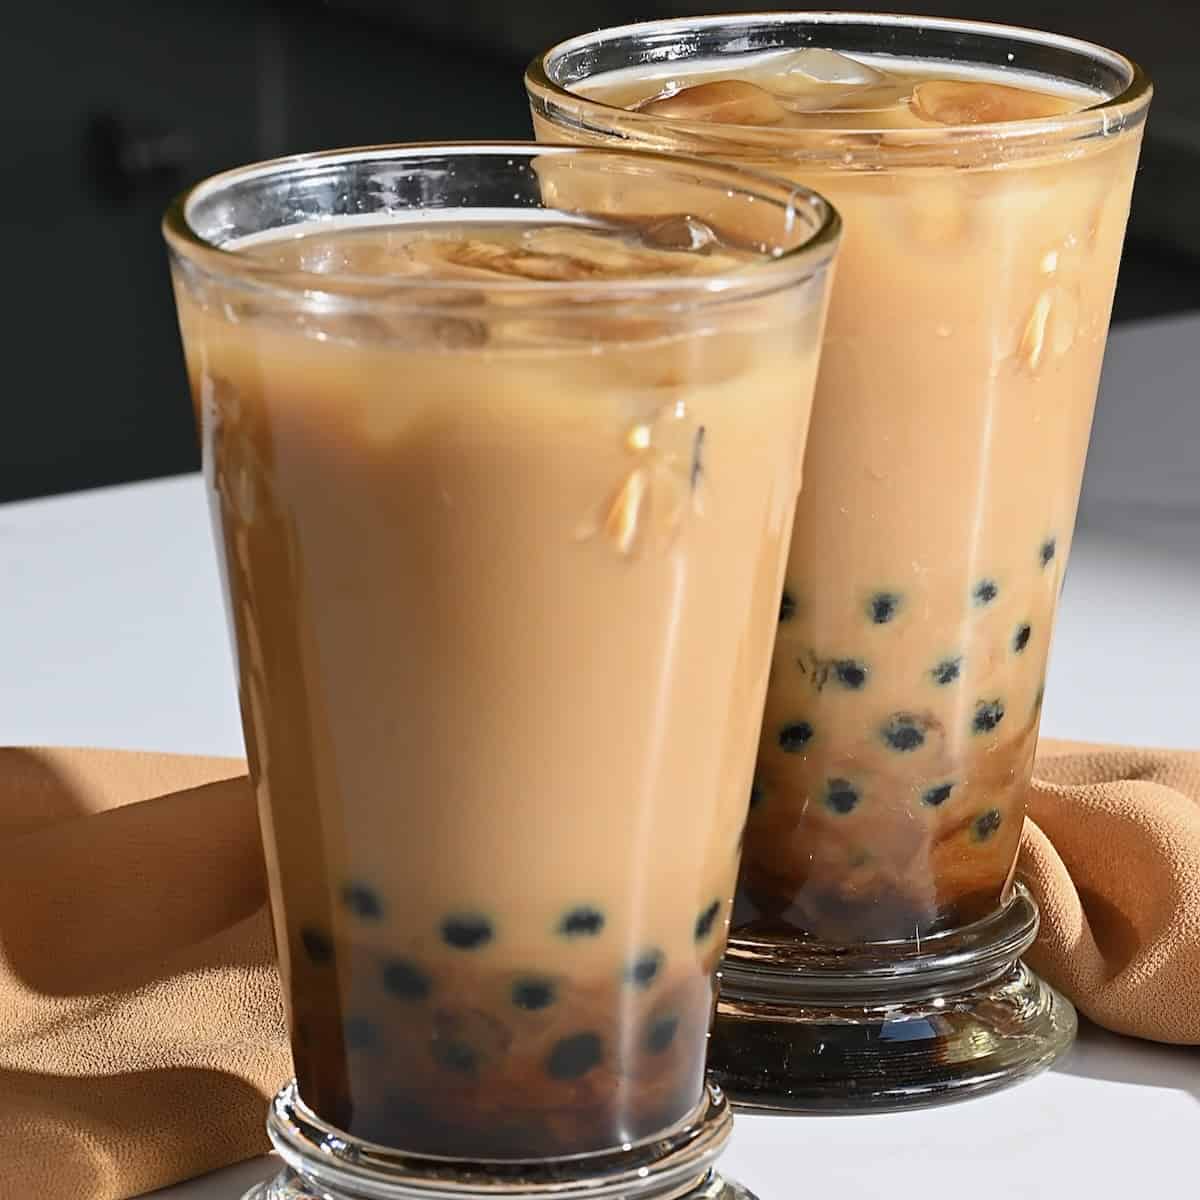 How to Make Bubble Tea at Home (Homemade Boba Milk Tea)